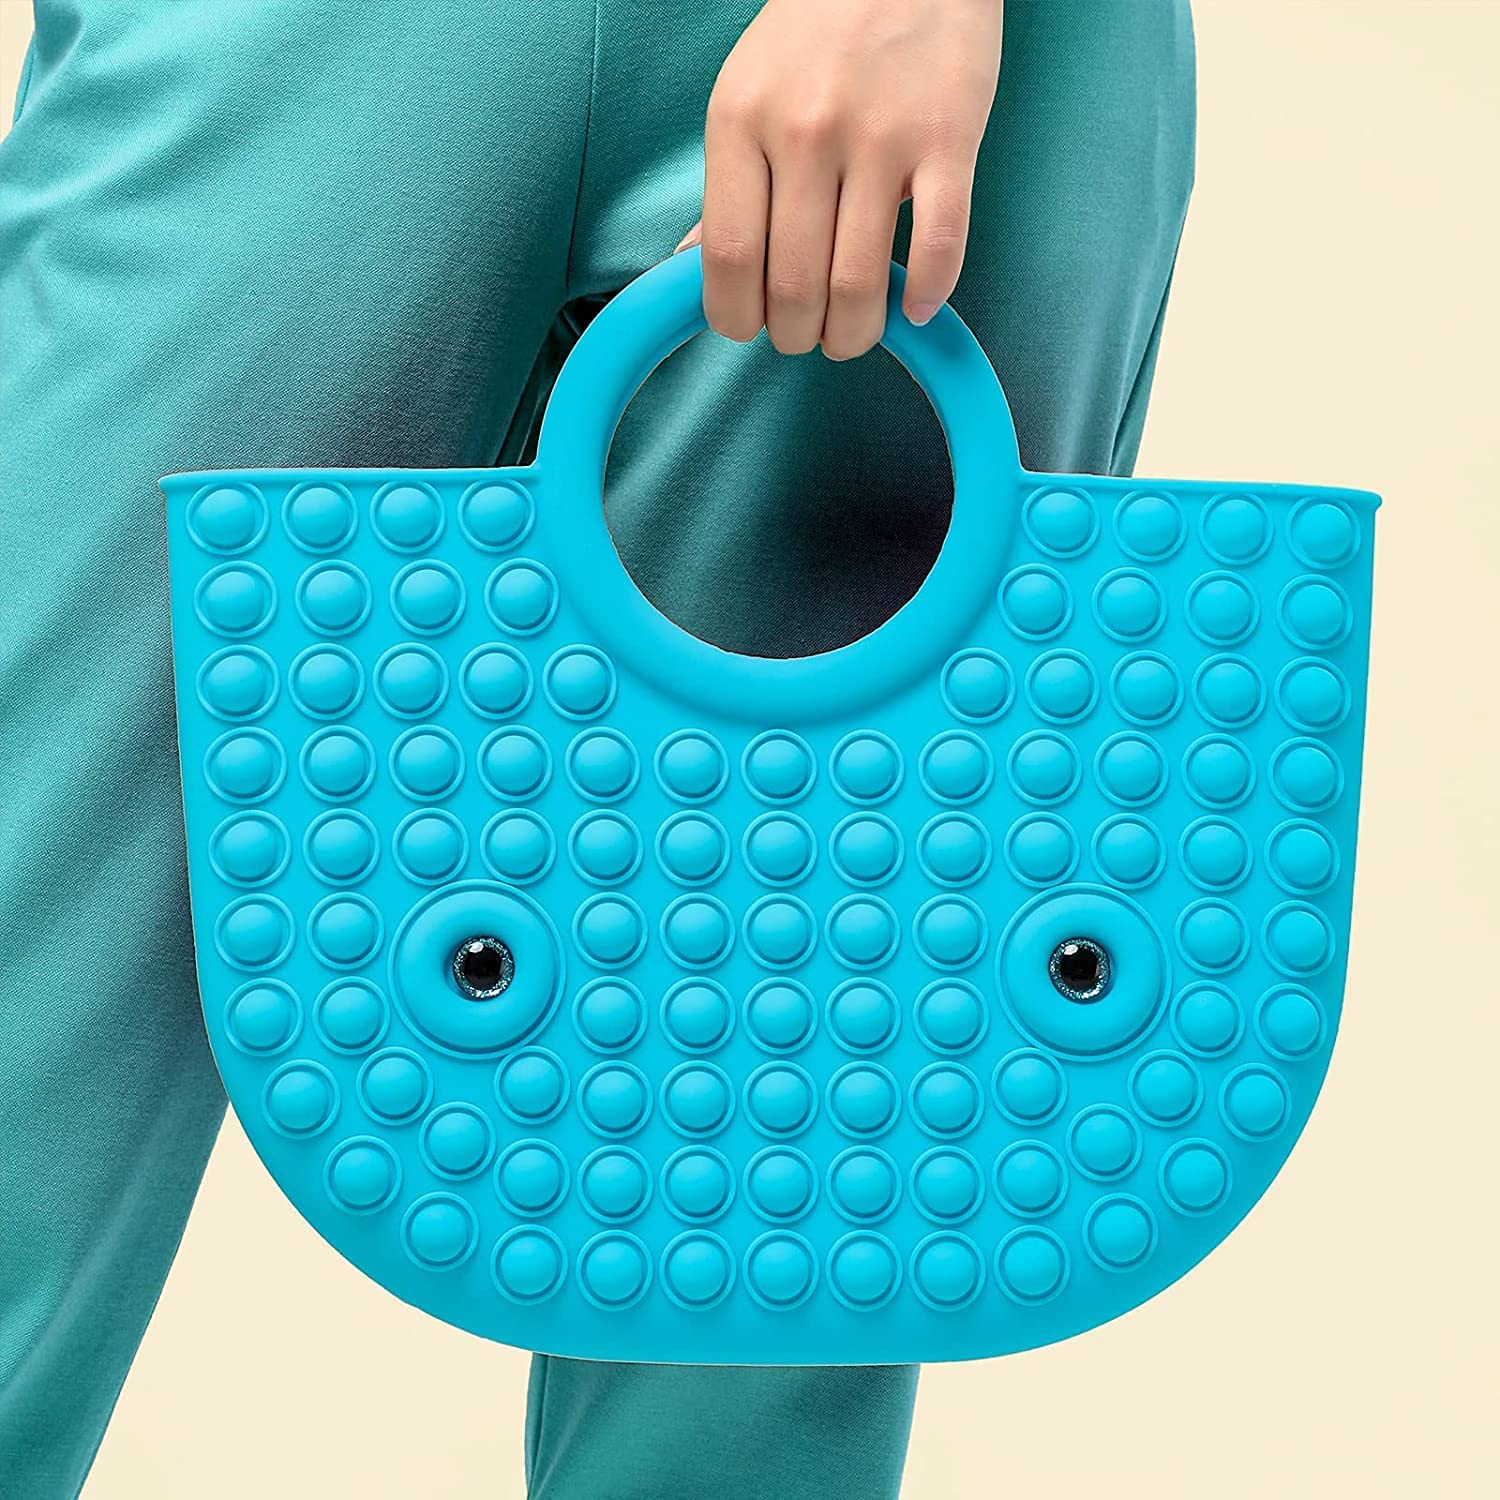 blue pop it fidget handbag in hands of a model wearing green pants with yellow background